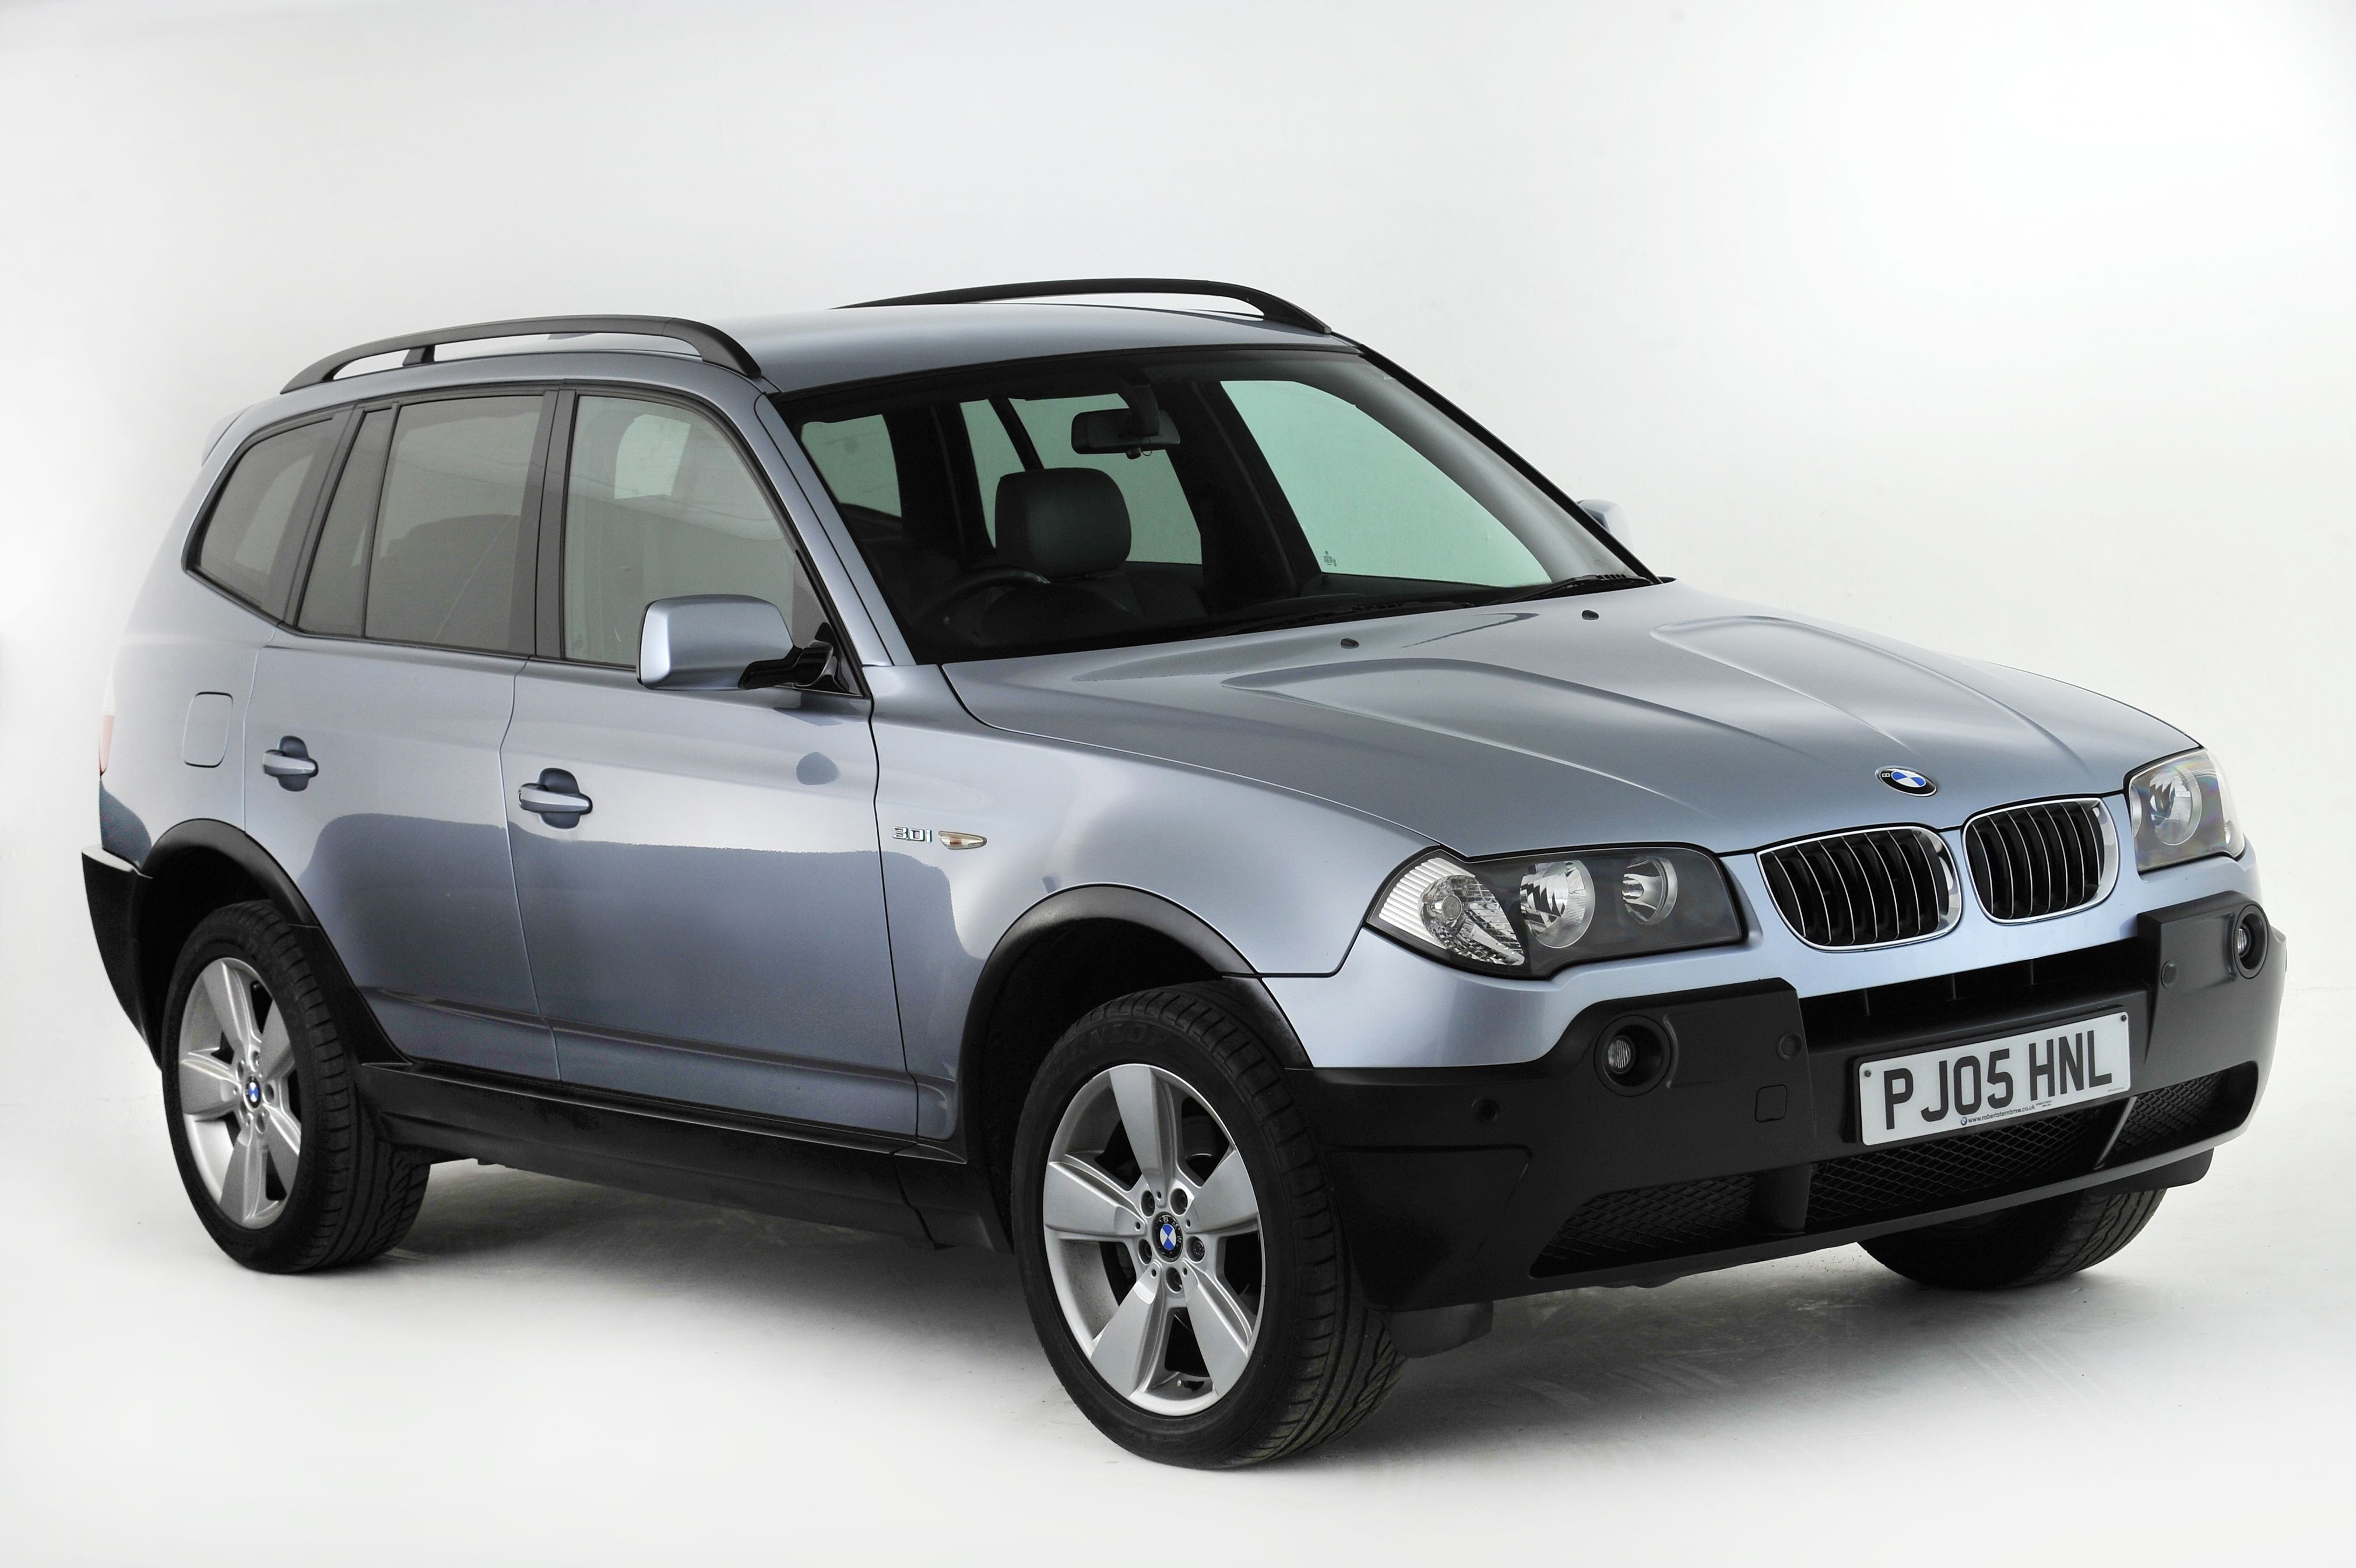 tunez Reversing Camera kit Reverse Car Backup Parking Rear View Safety For BMW X3 E83 Series